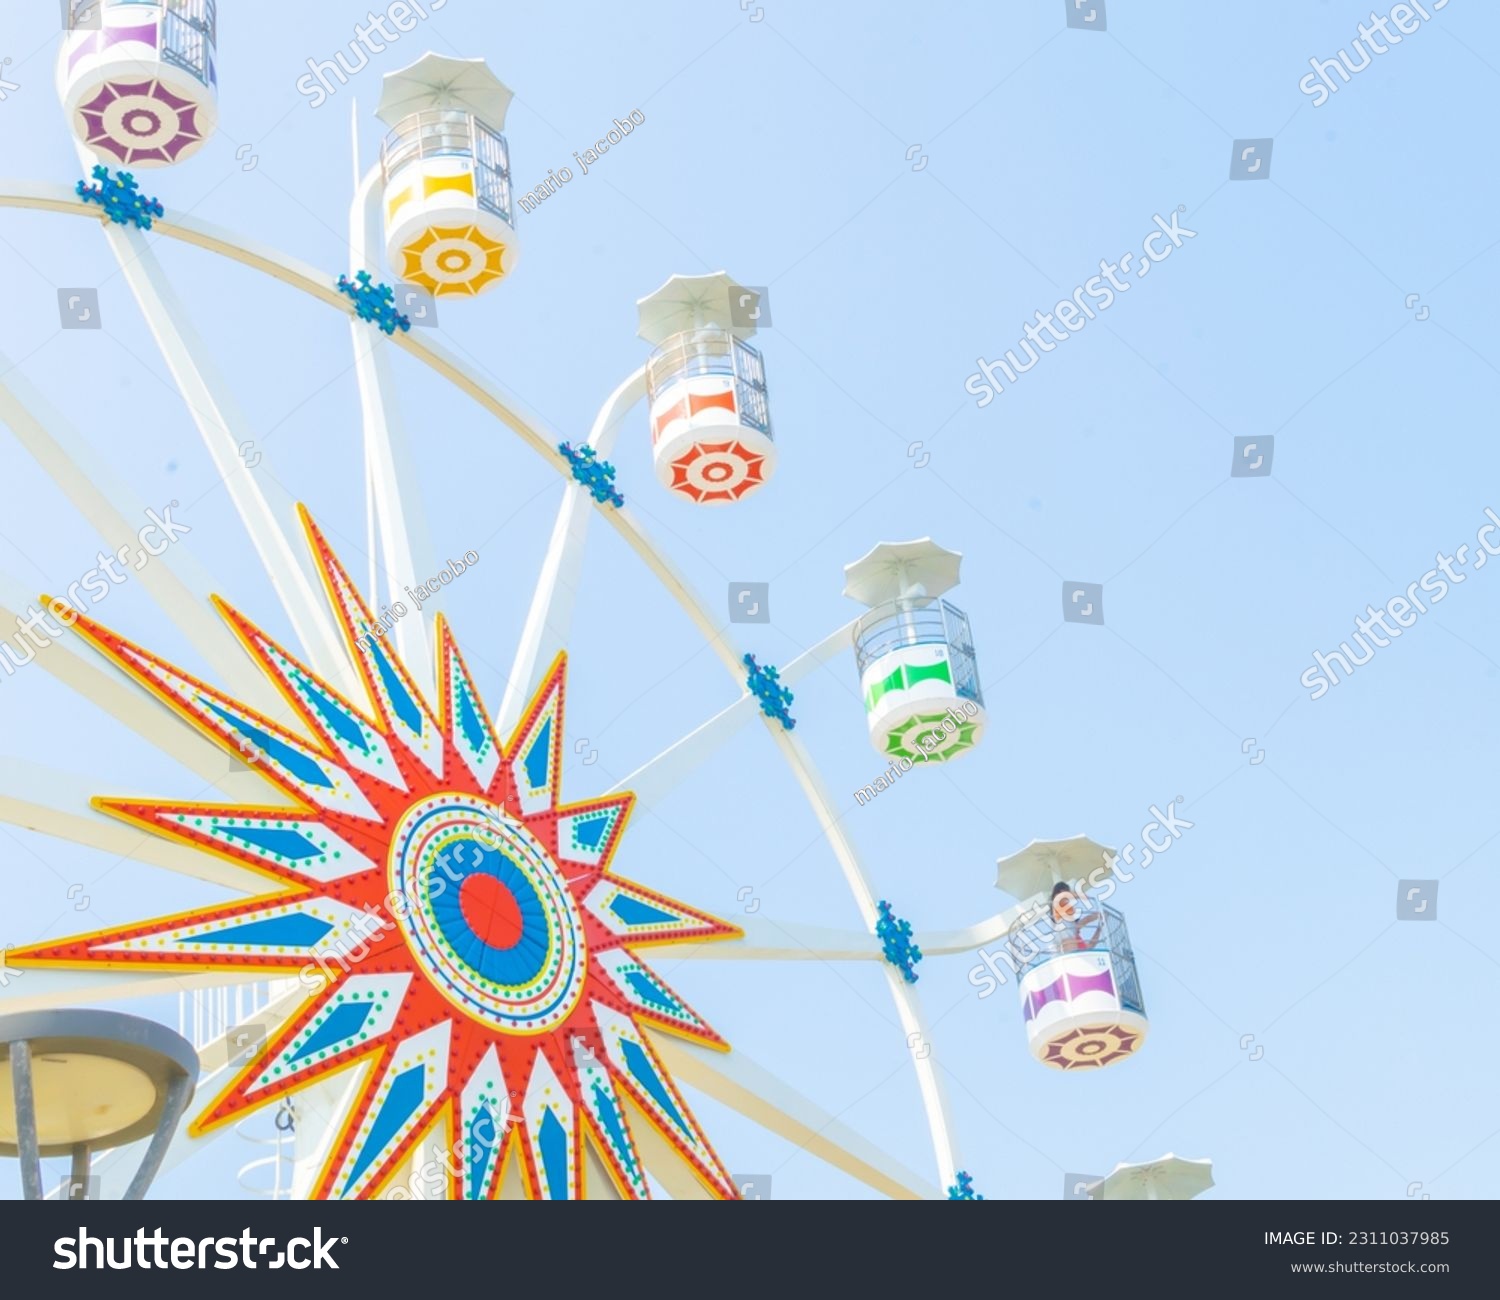 Photograph of the Ferris wheel ride, located in Sunset Park La Libertad, El Salvador. #2311037985